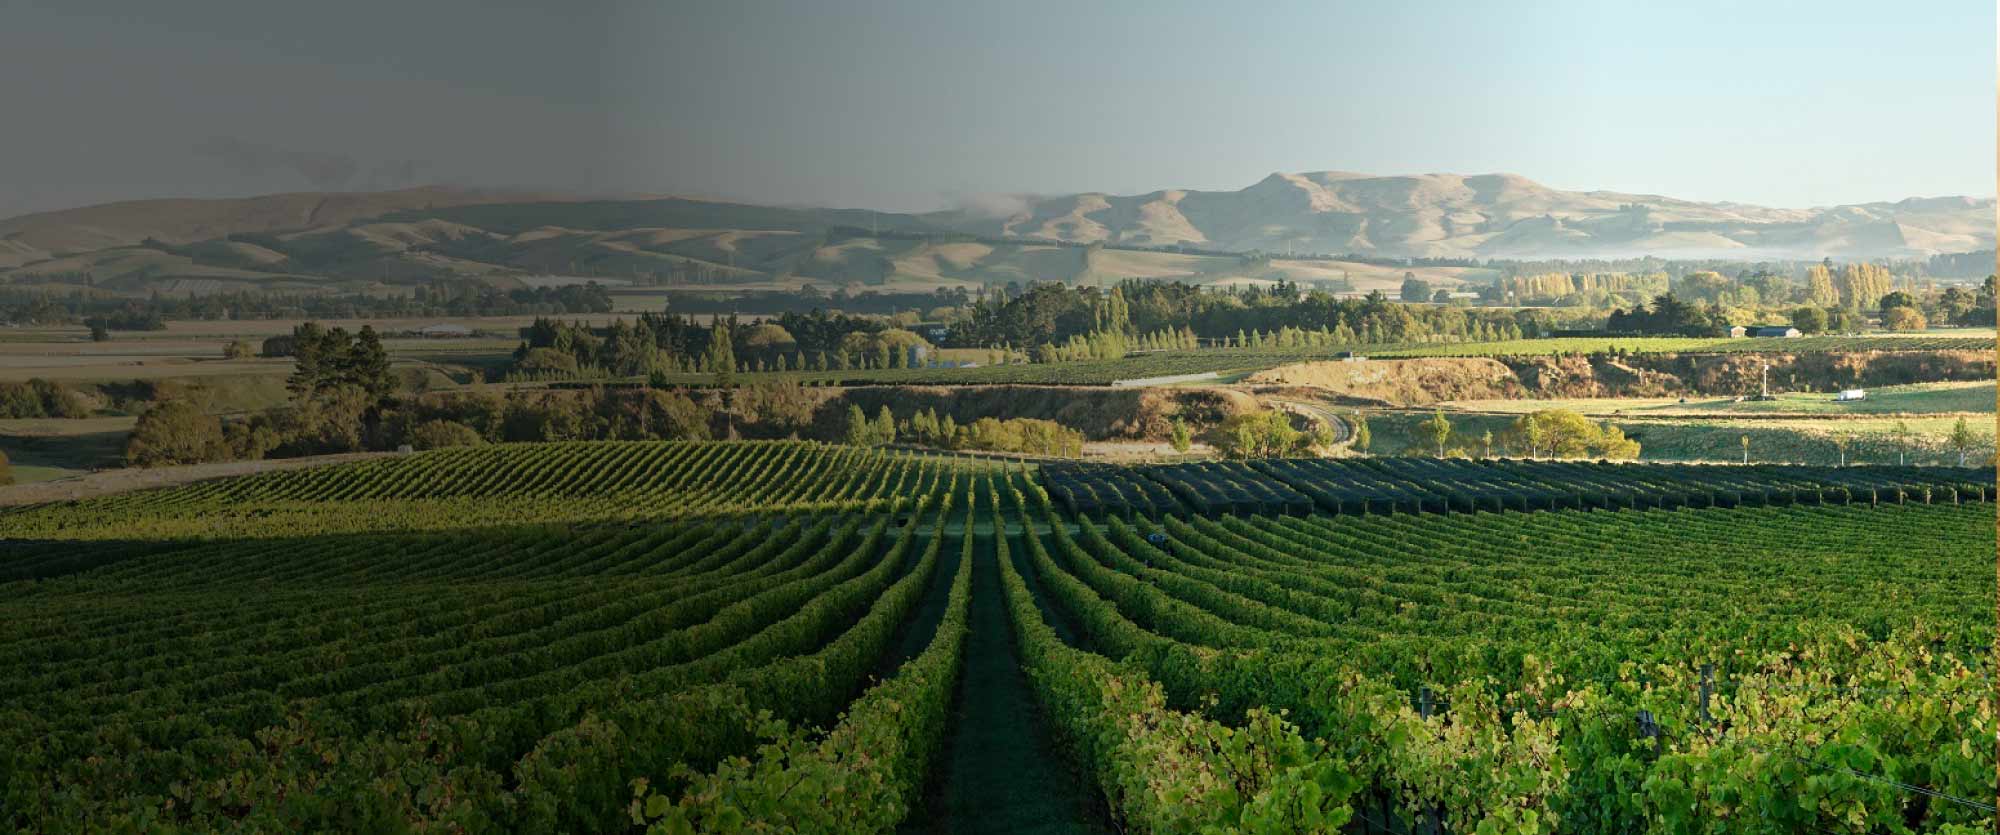 New Zealand Wairarapa 紐西蘭懷拉拉帕 僅佔 1% 產量的 精品紅酒產區